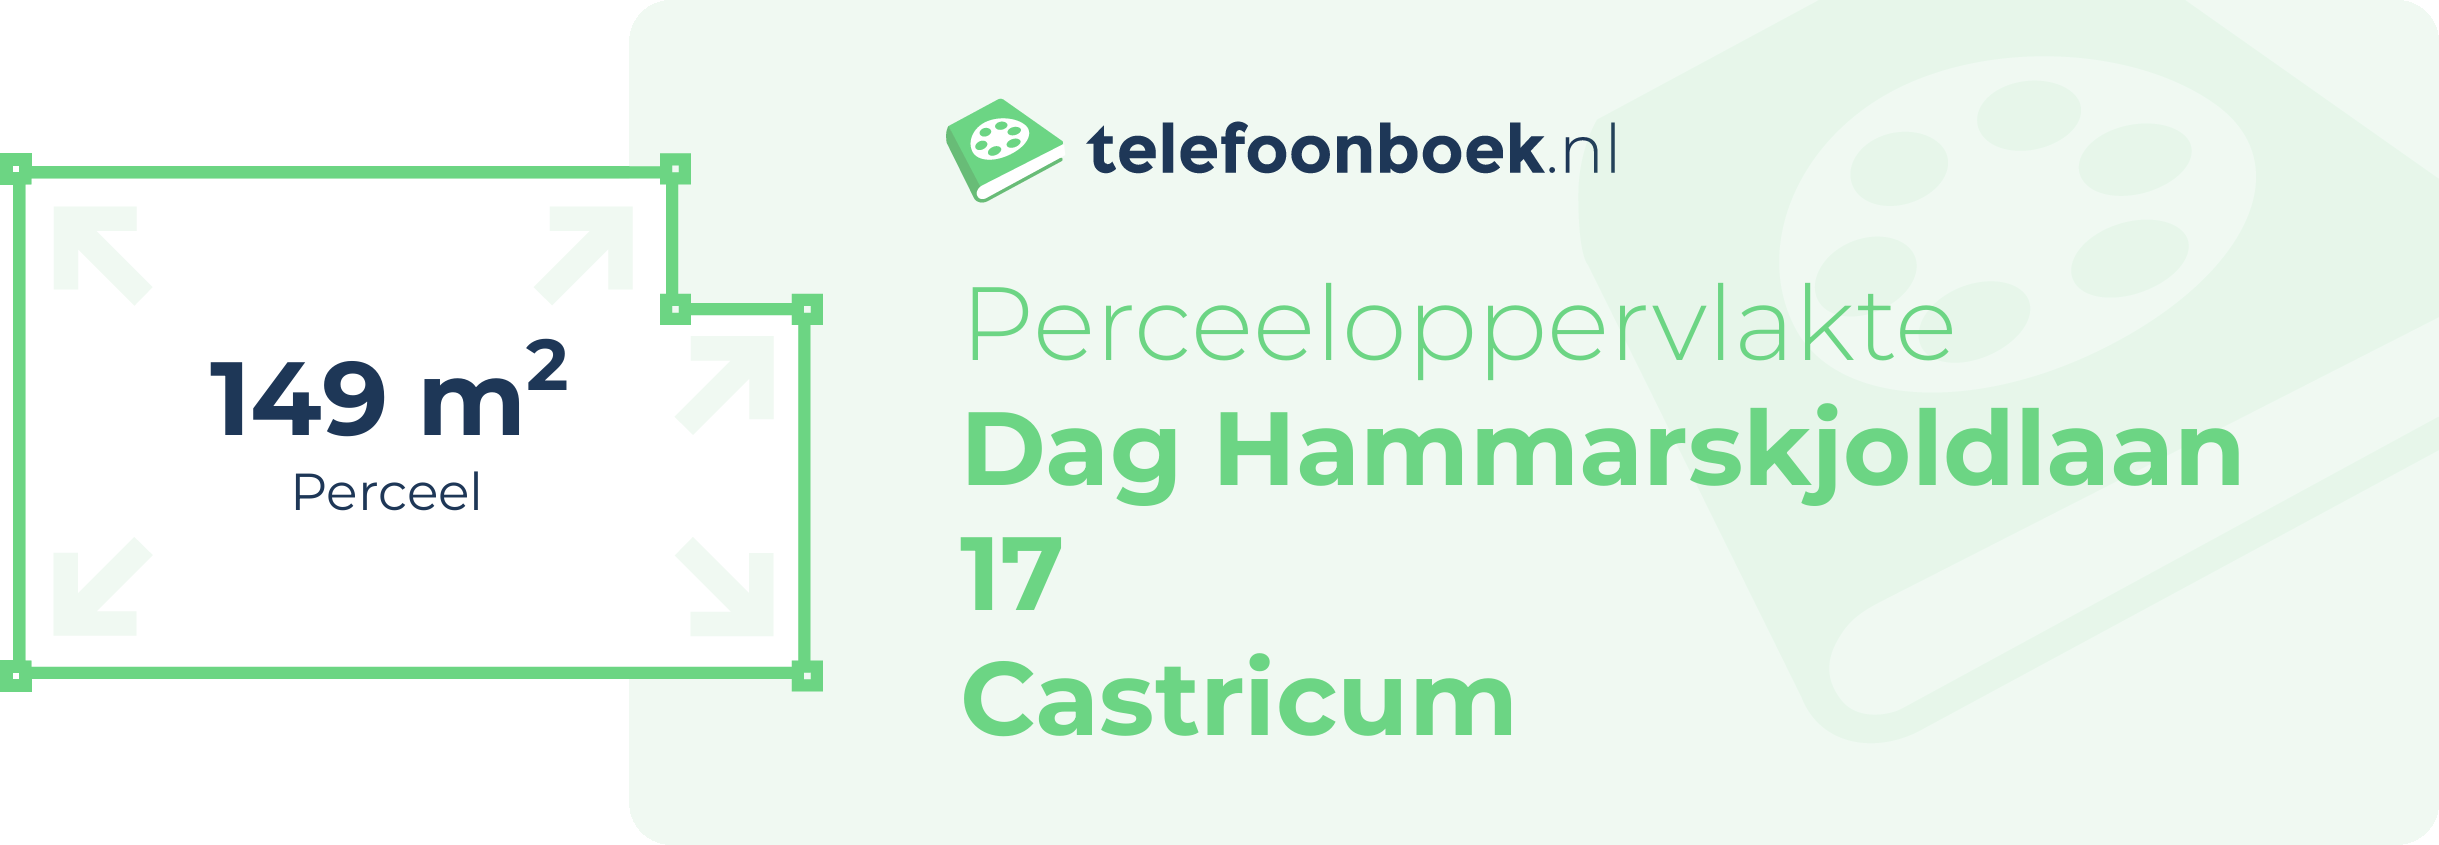 Perceeloppervlakte Dag Hammarskjoldlaan 17 Castricum